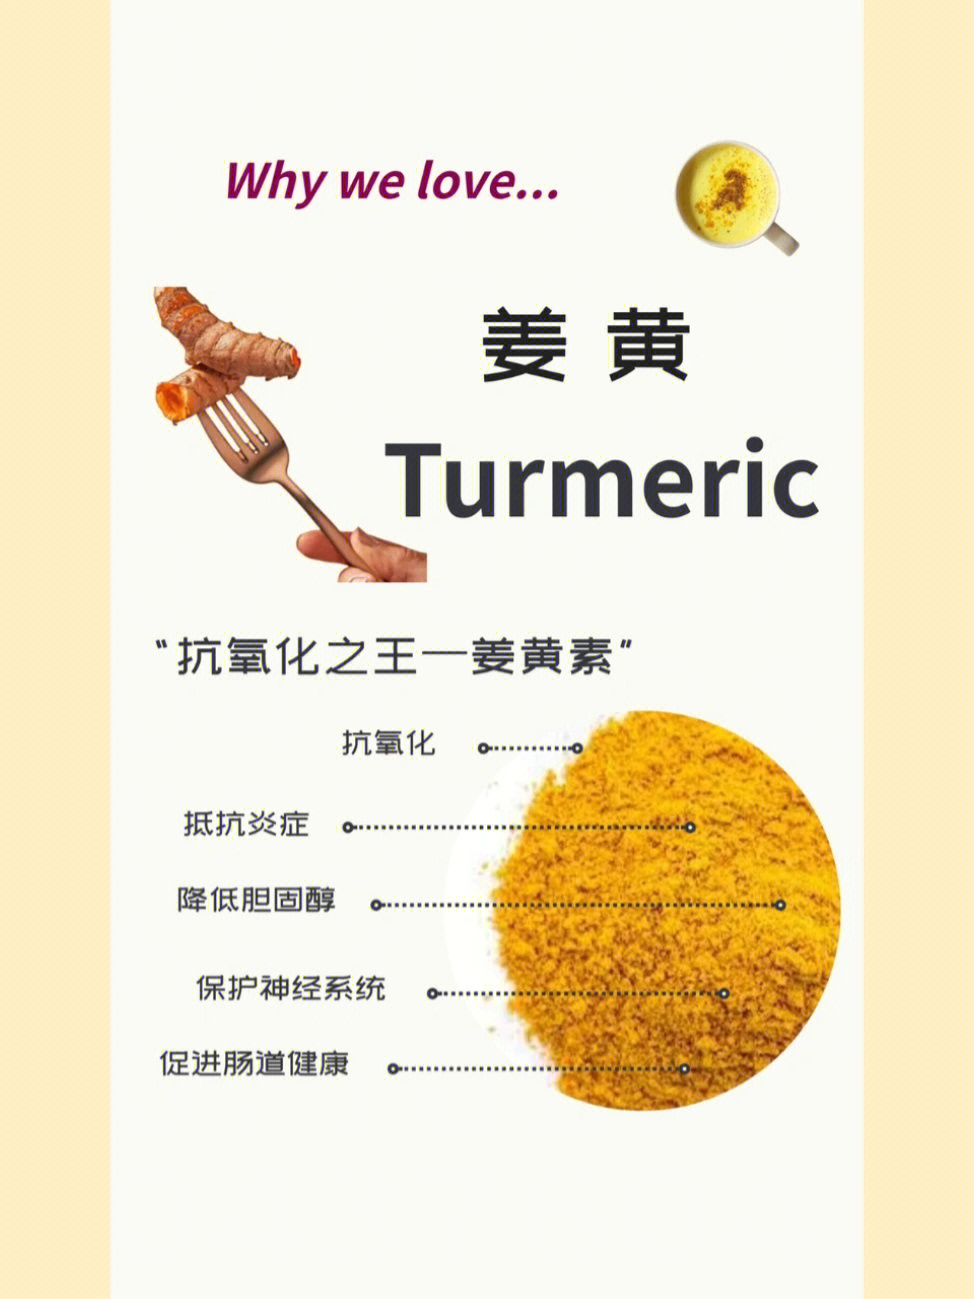 食谱recipe姜黄粉turmericpowder